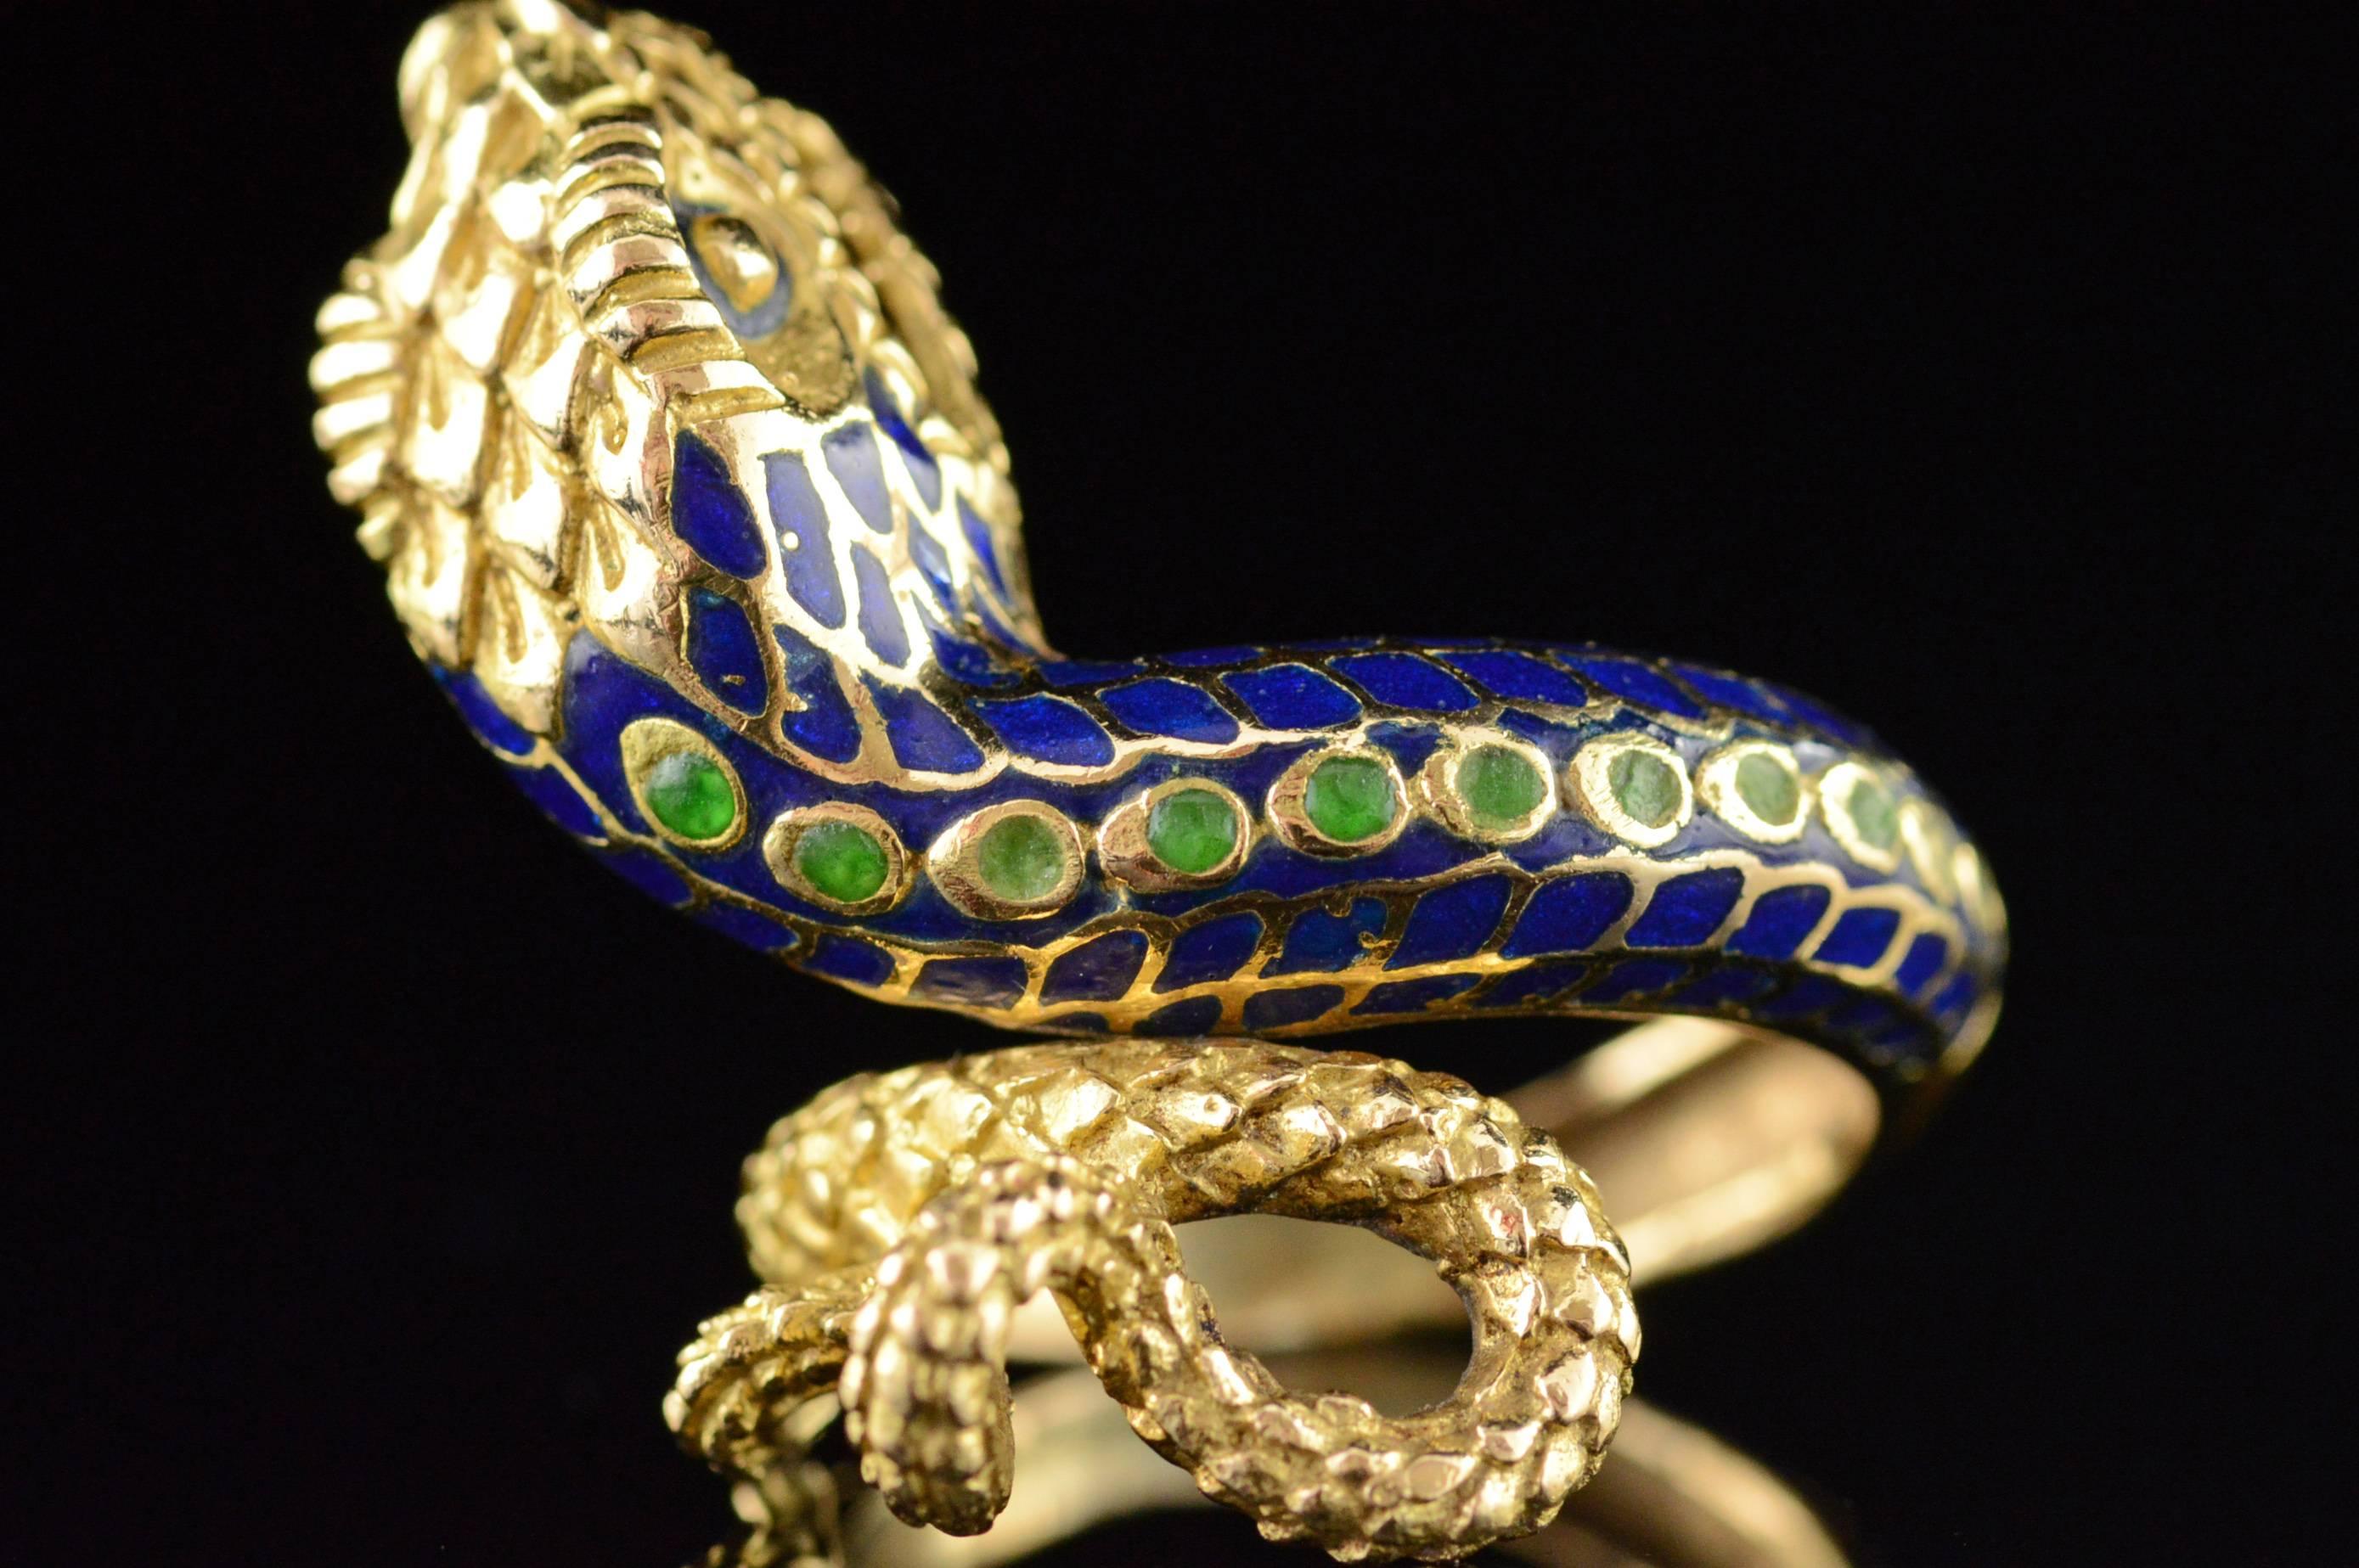 Detailed Blue and Green Enamel Gold Snake Ring 2